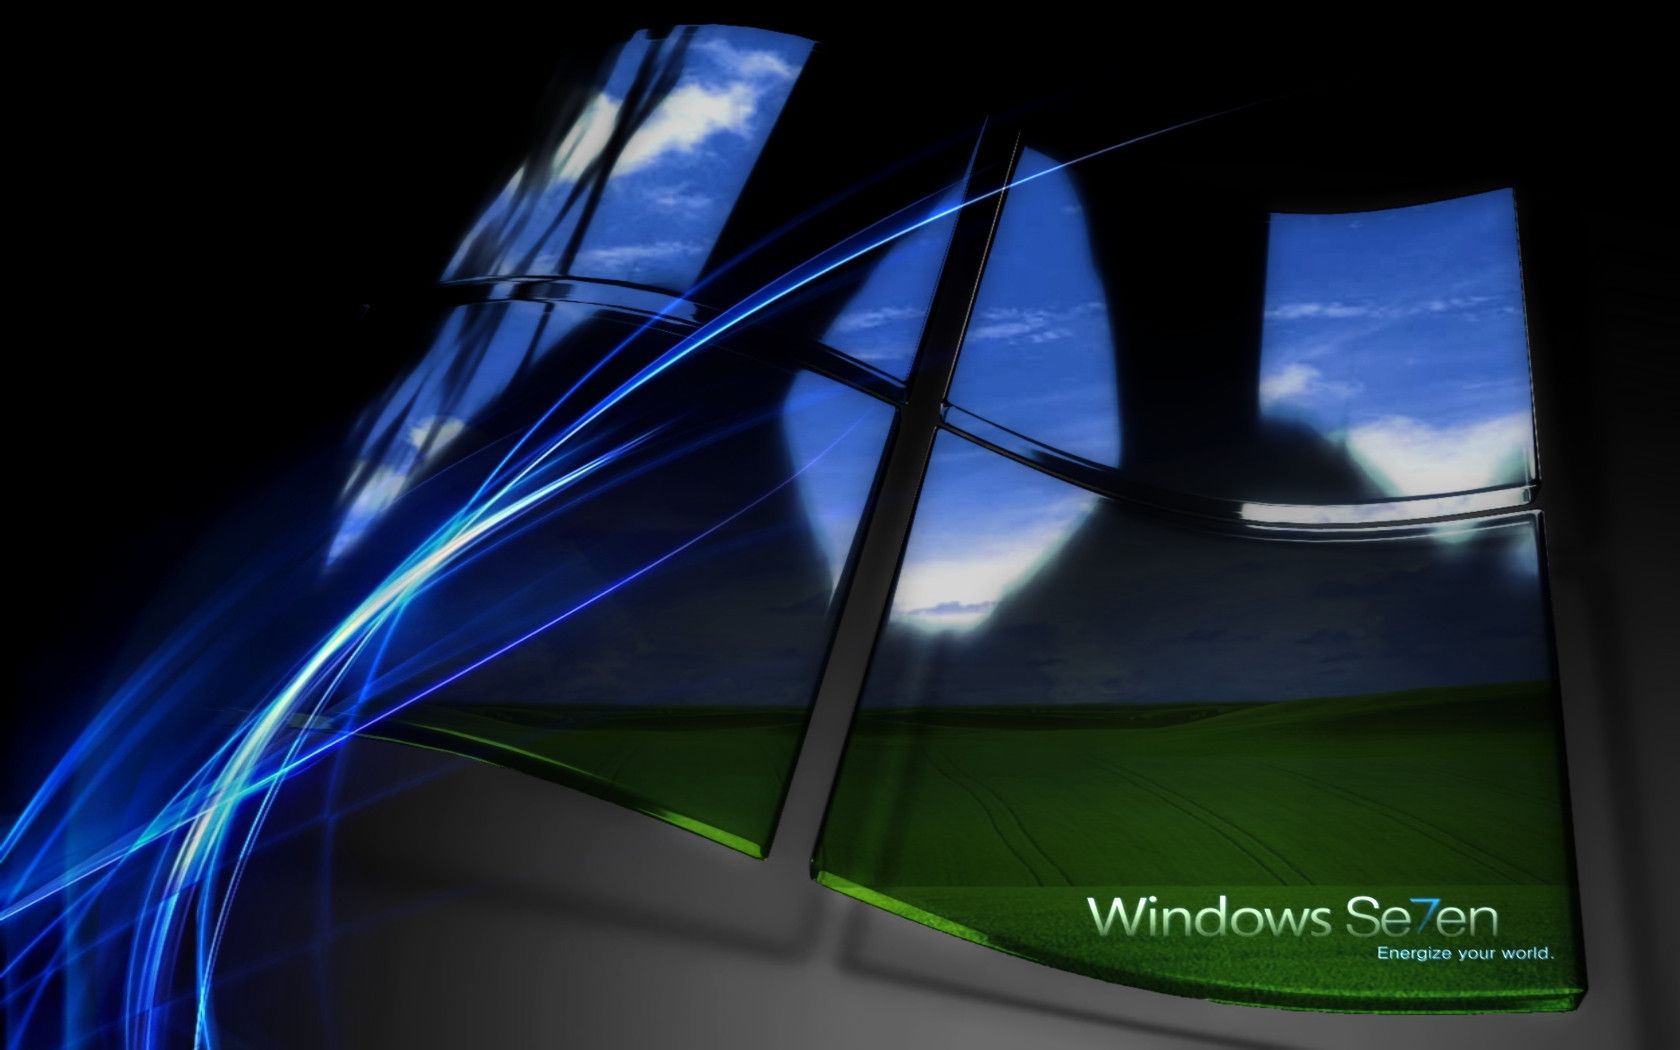 Windows 7 Ultimate Desktop Backgrounds - Wallpaper Cave